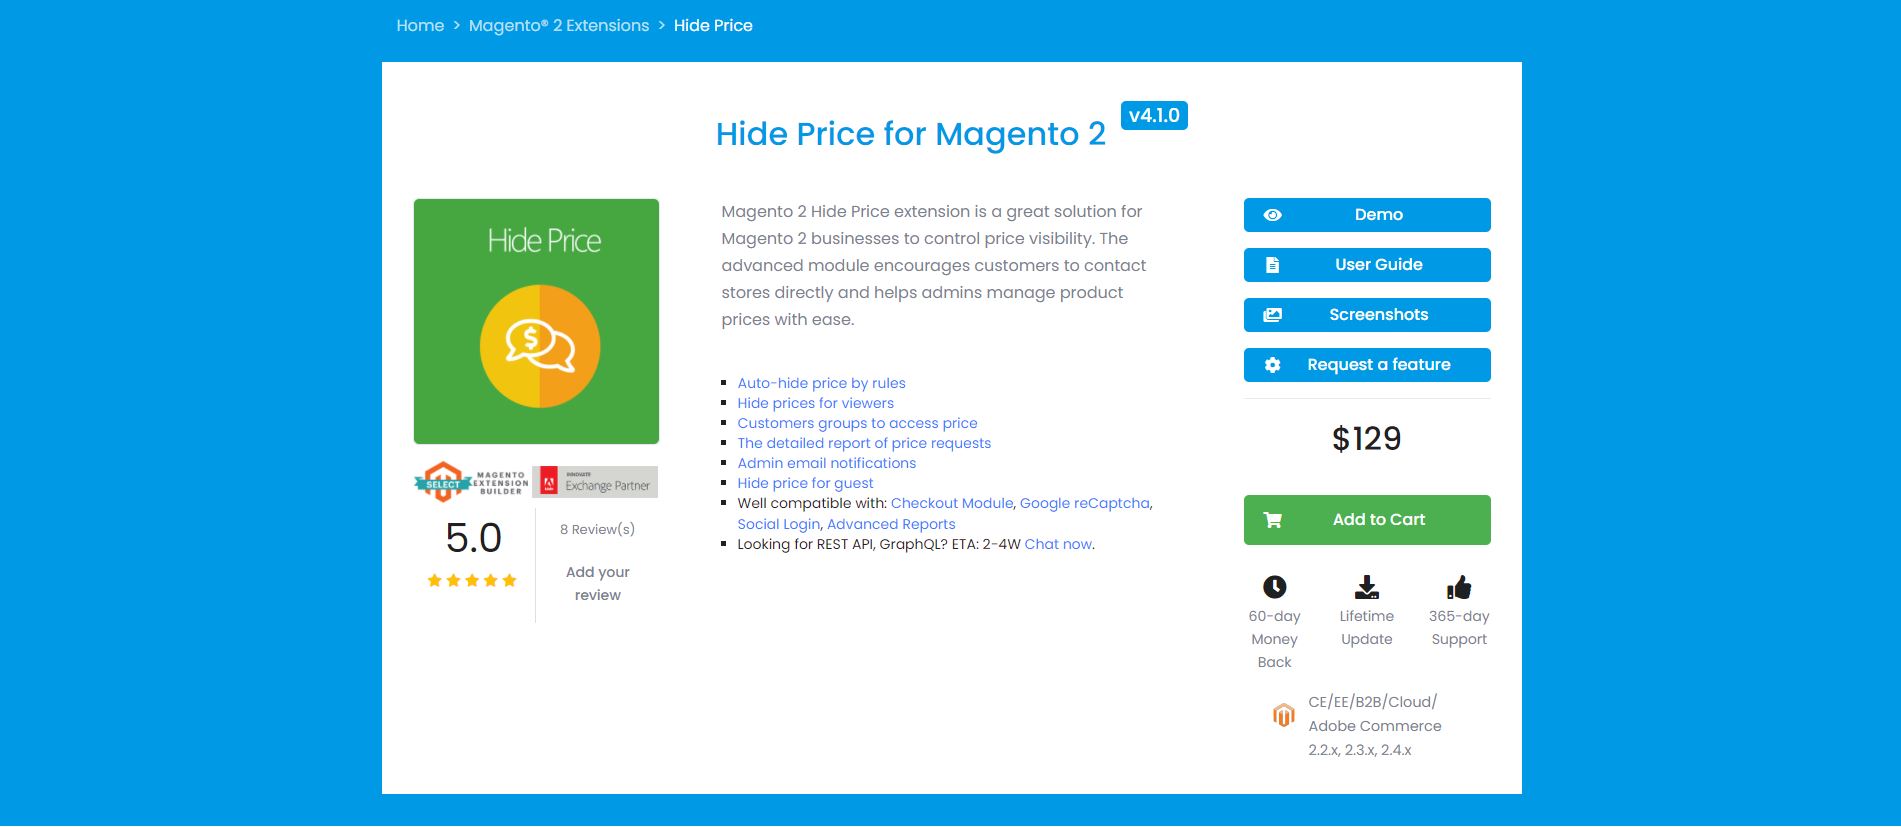 Magento hide price extension
